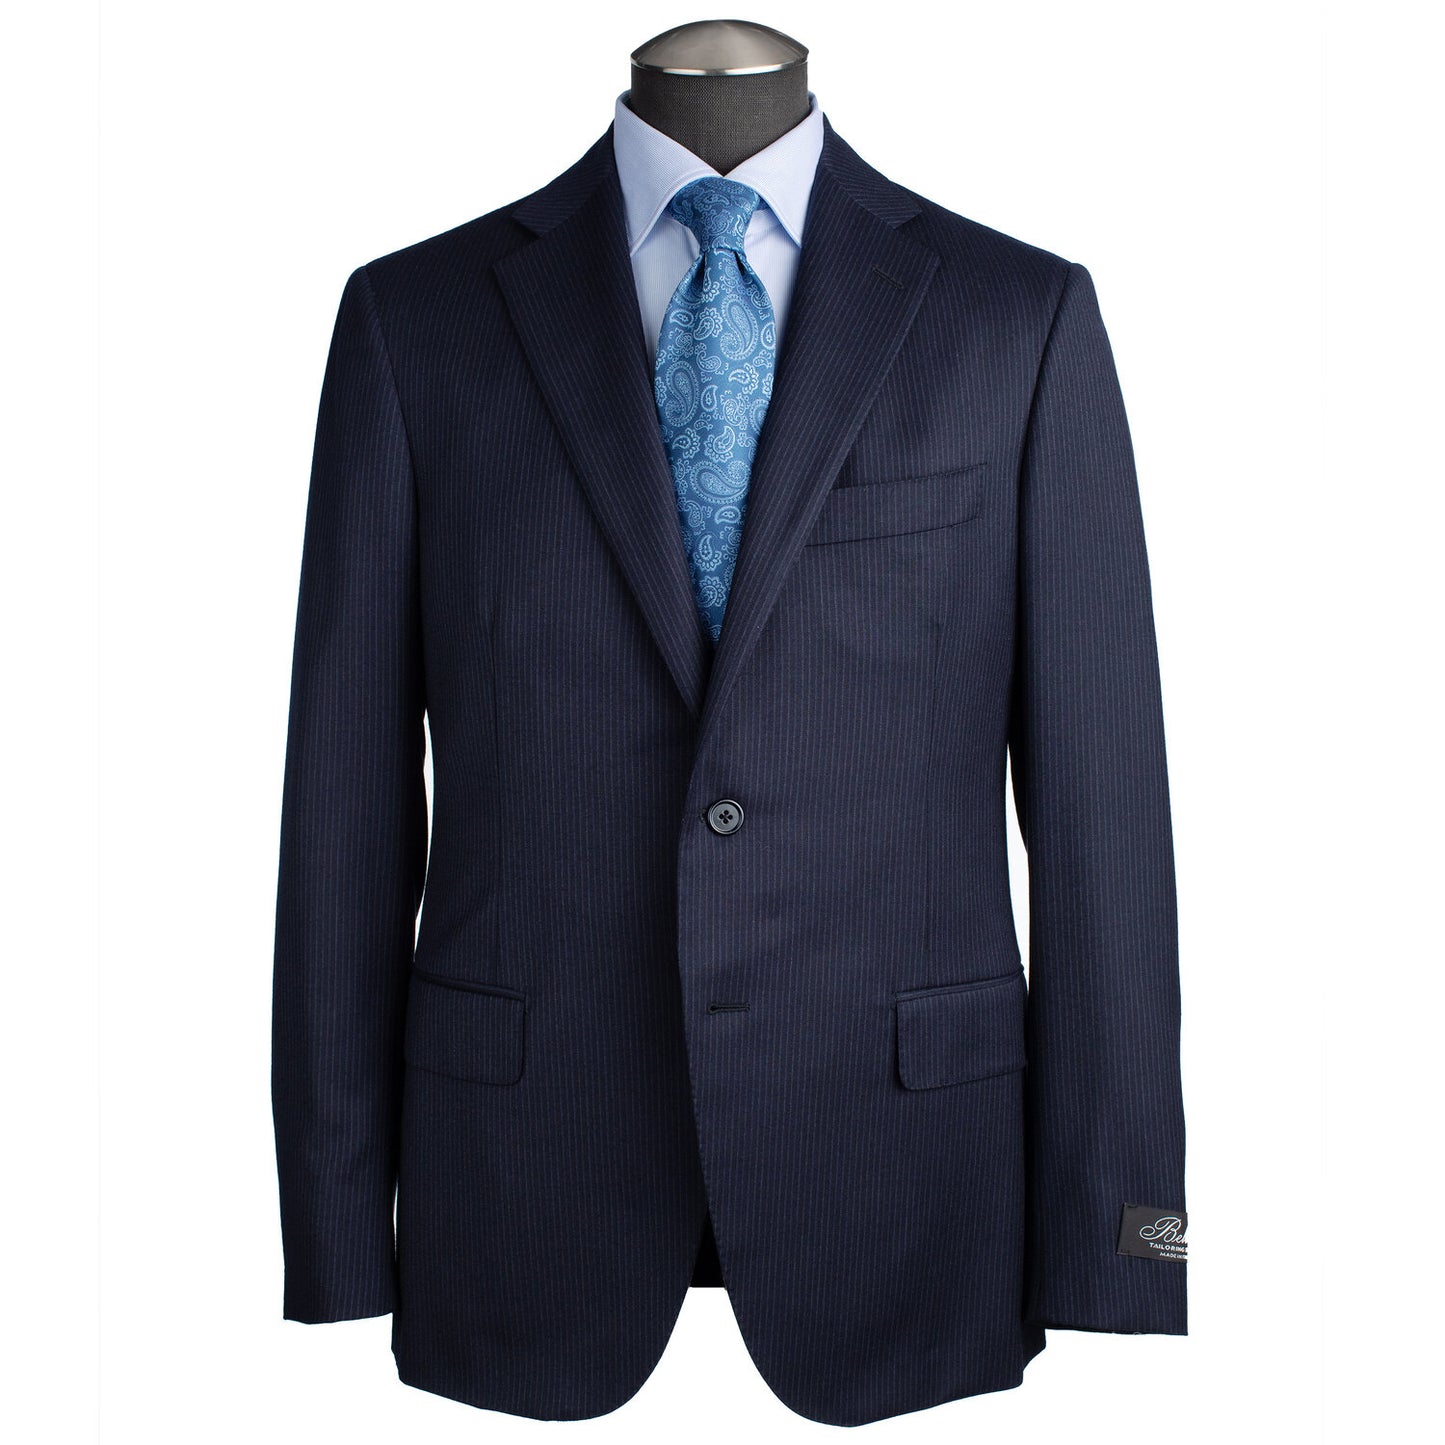 Belvest Flannel Suit in Navy Blue Pinstripes